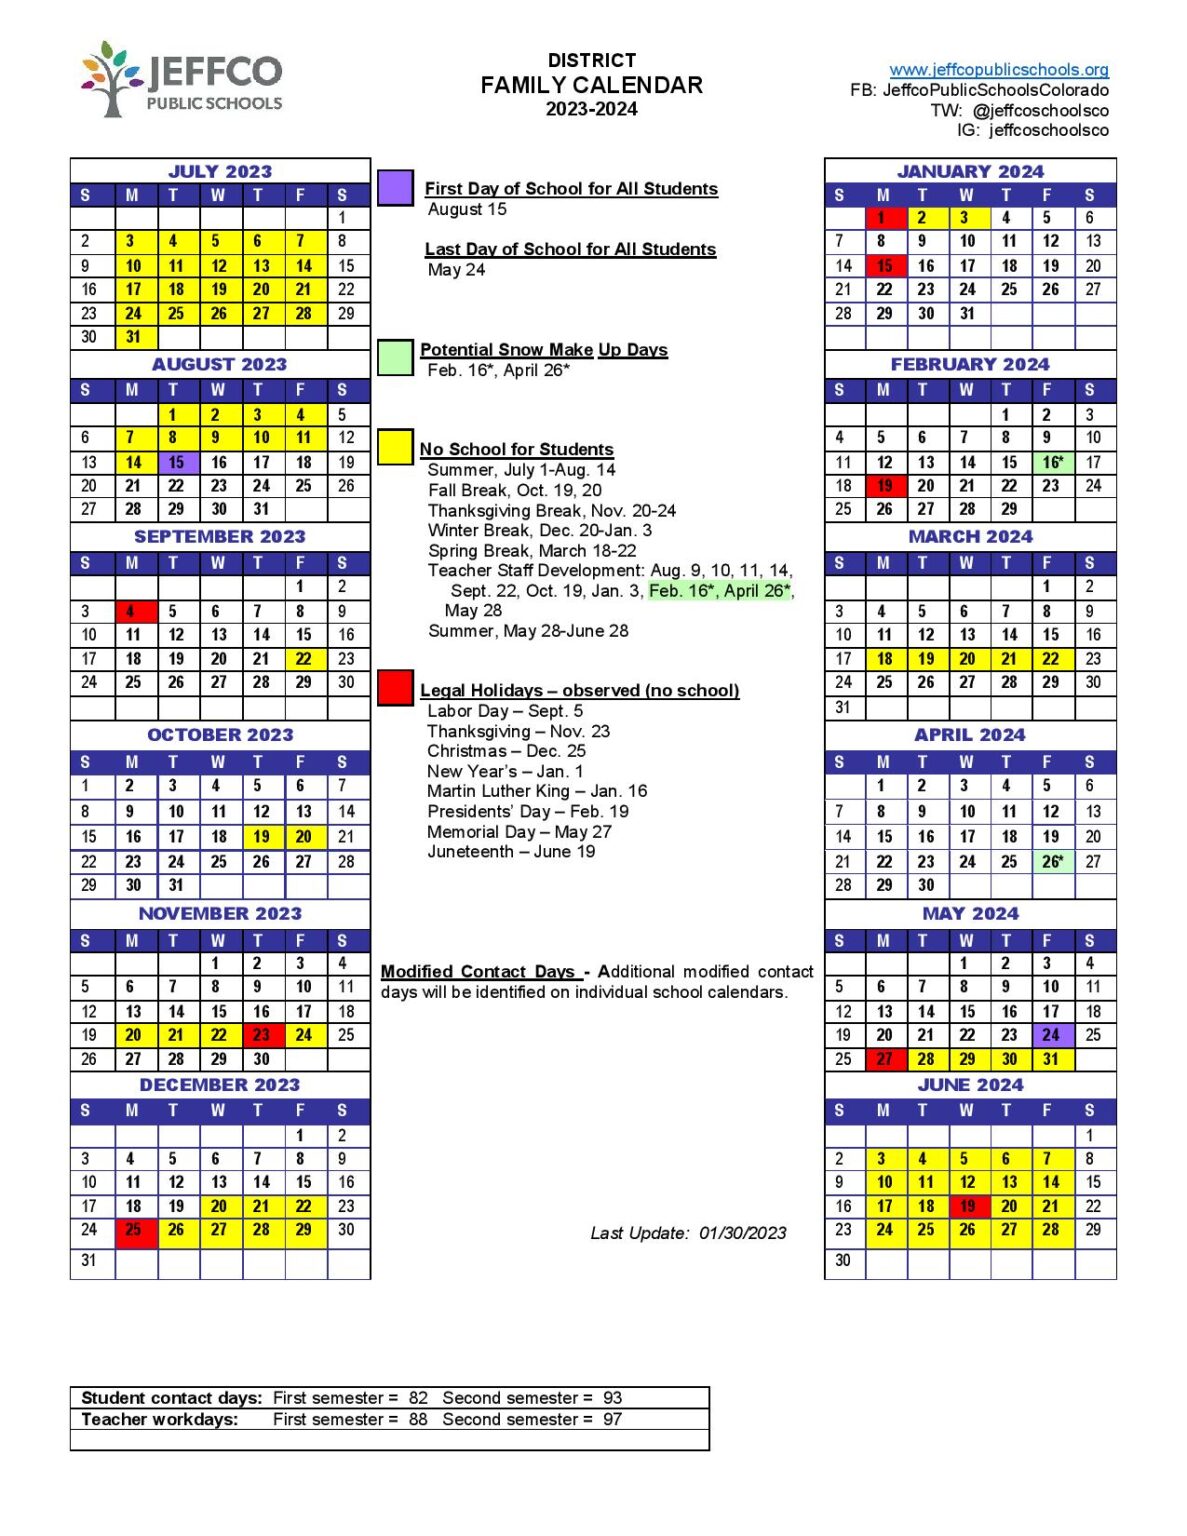 jeffco-public-schools-calendar-2023-2024-holidays-school-calendar-info